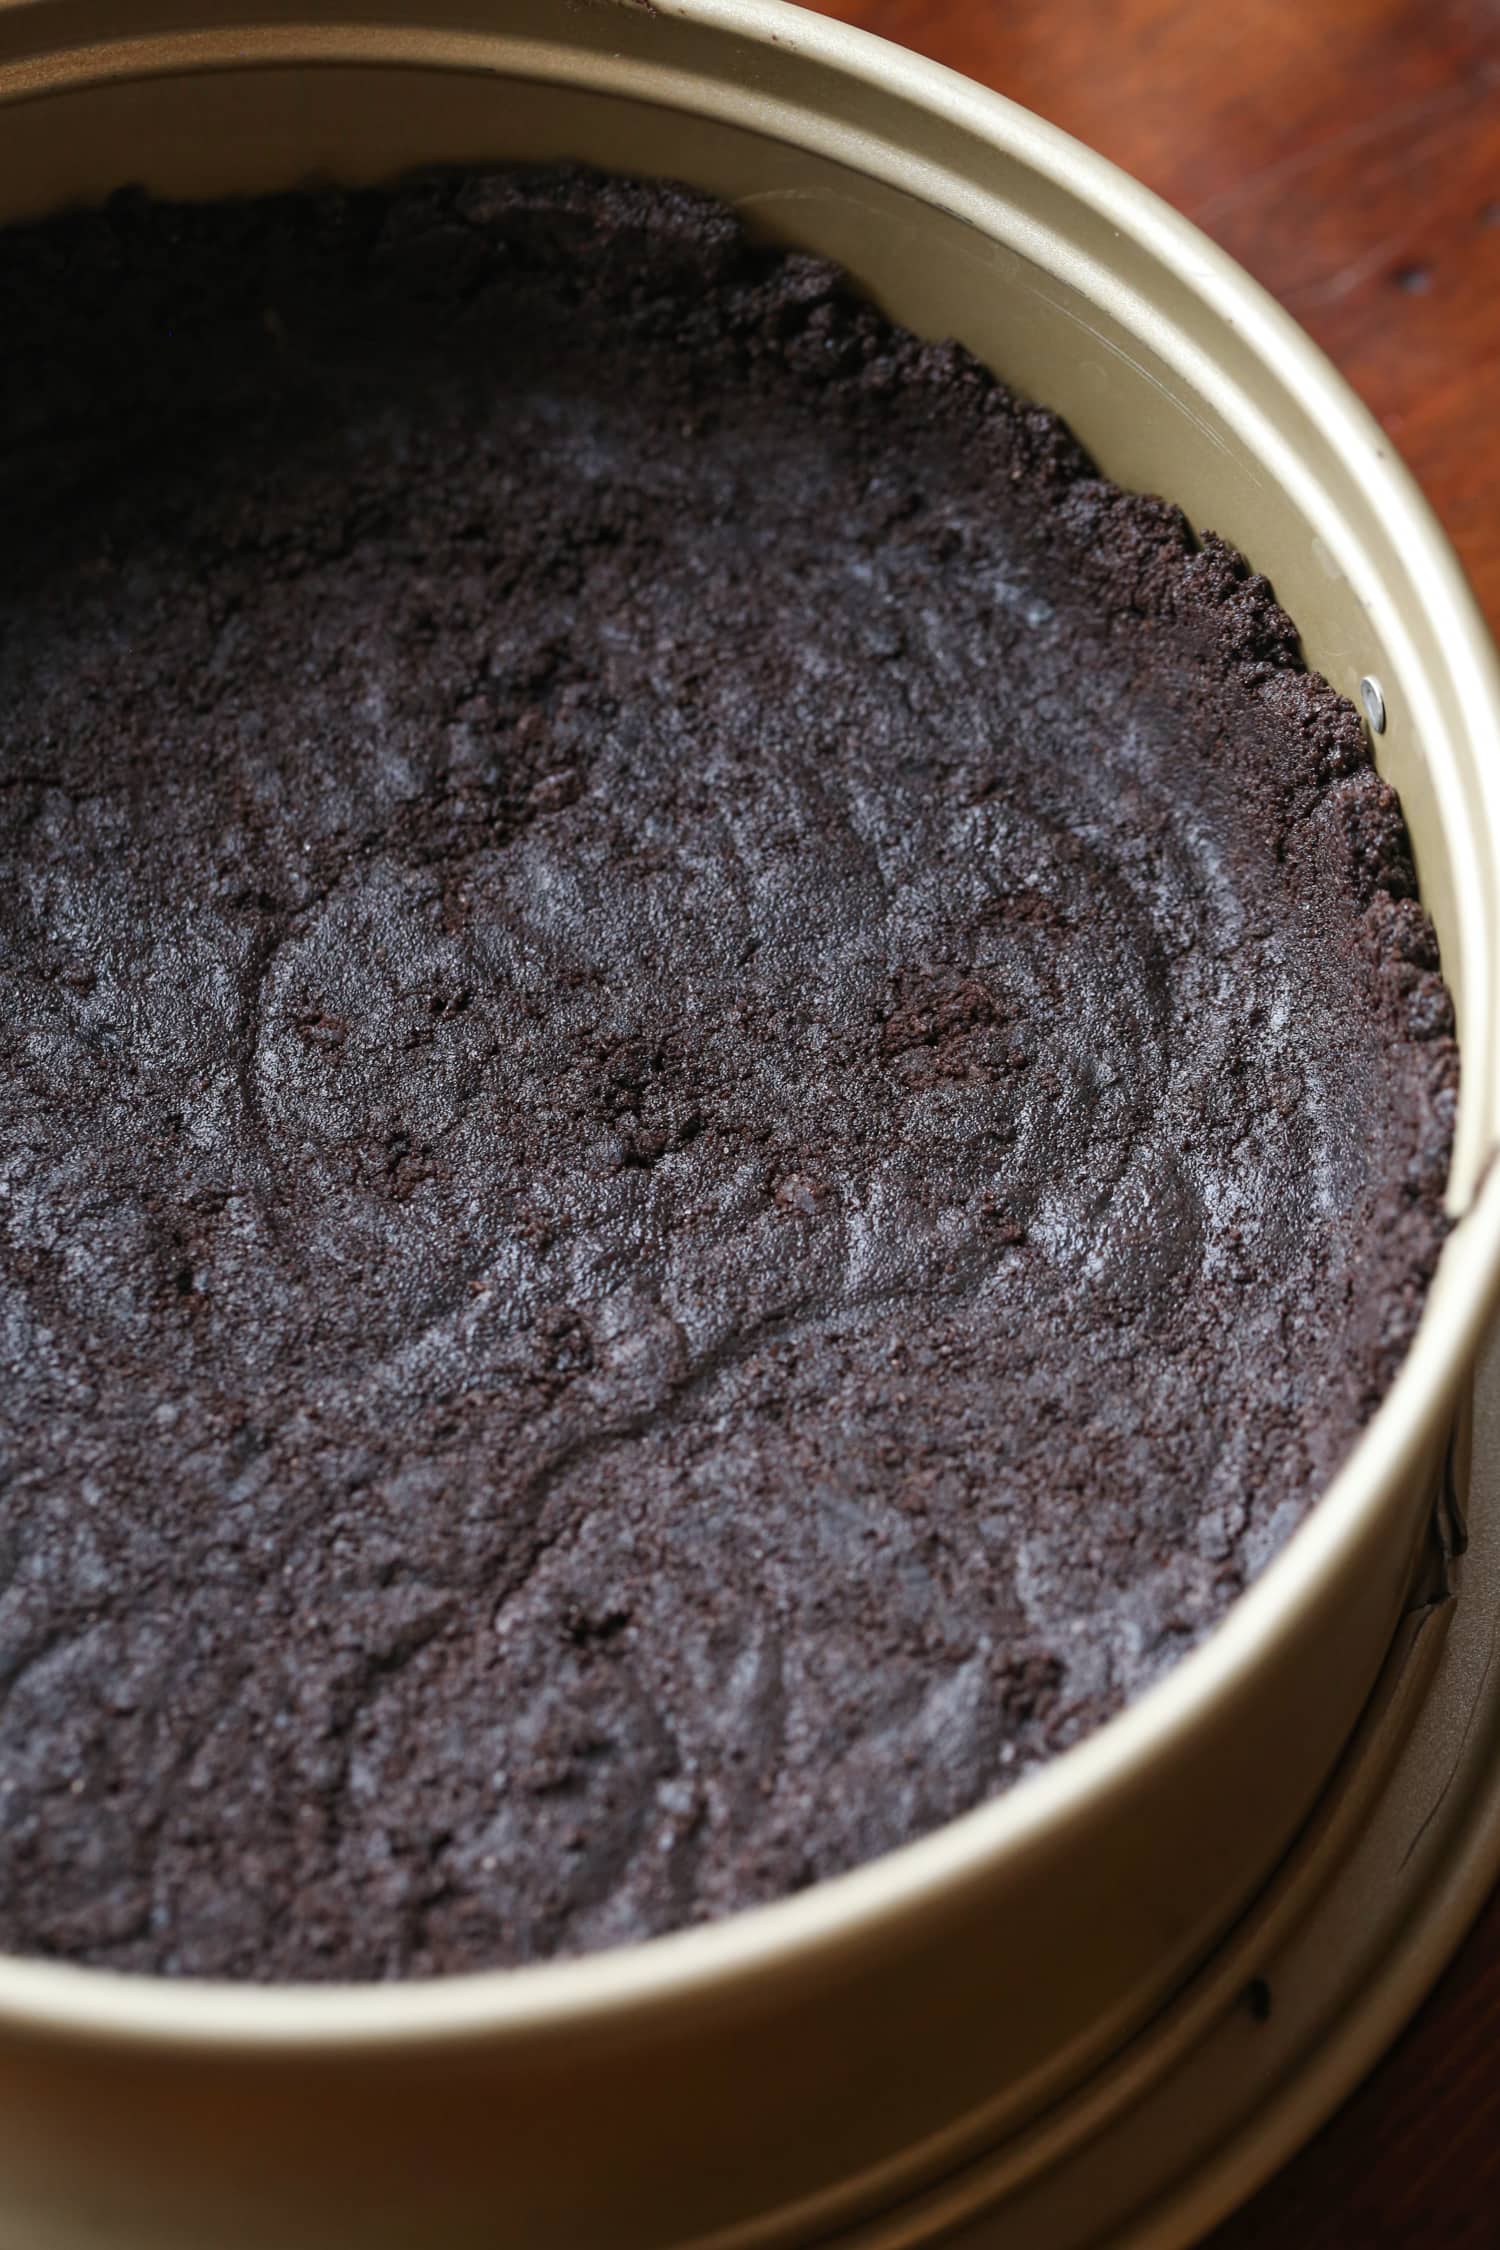 An Oreo cheesecake crust in a springform pan.